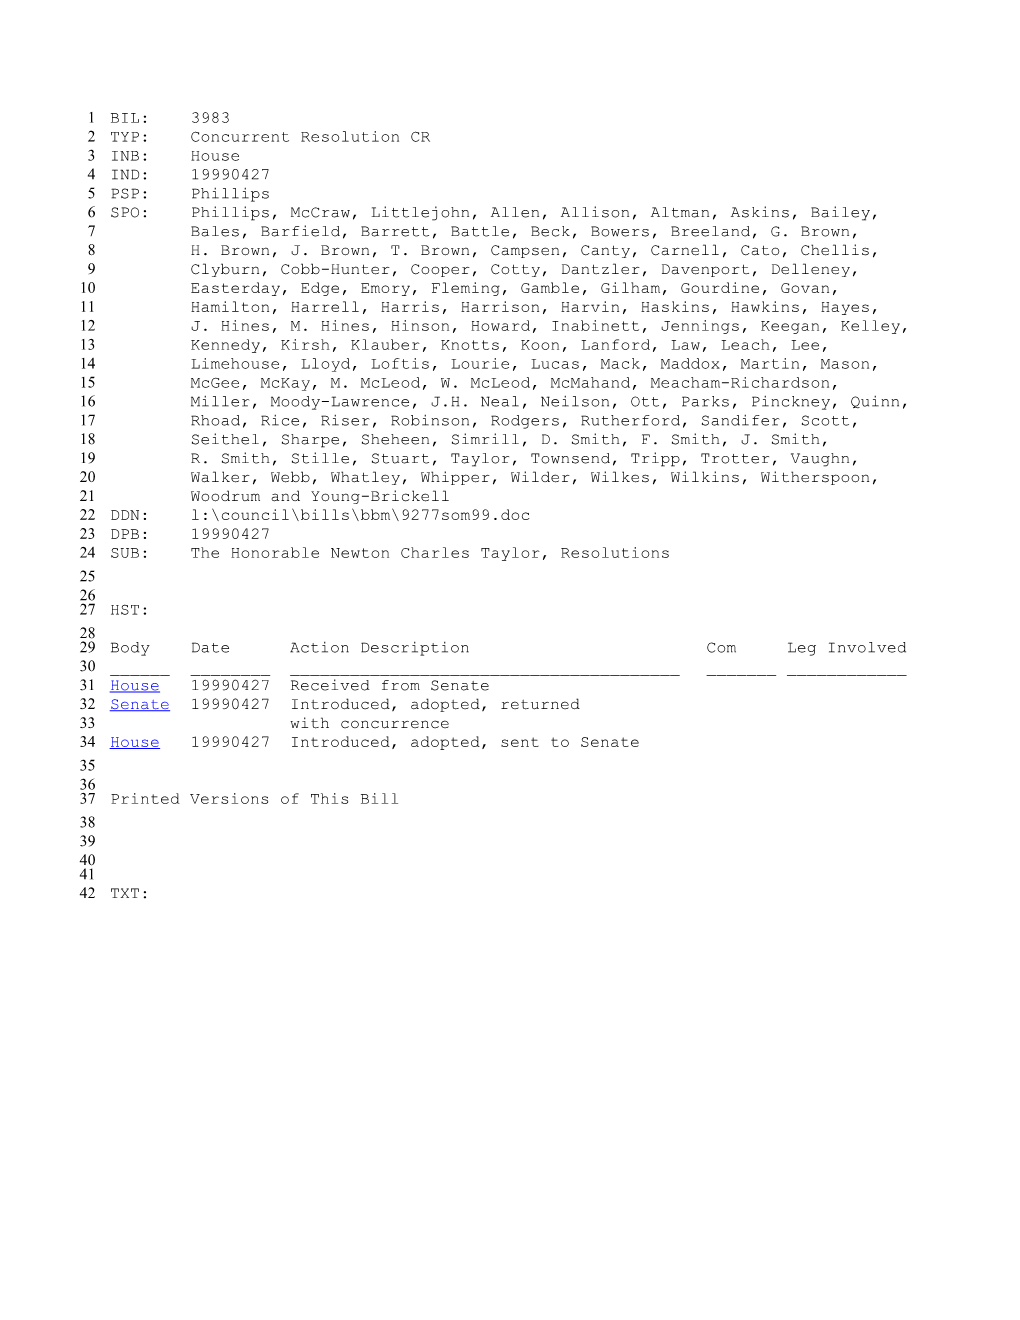 1999-2000 Bill 3983: the Honorable Newton Charles Taylor, Resolutions - South Carolina